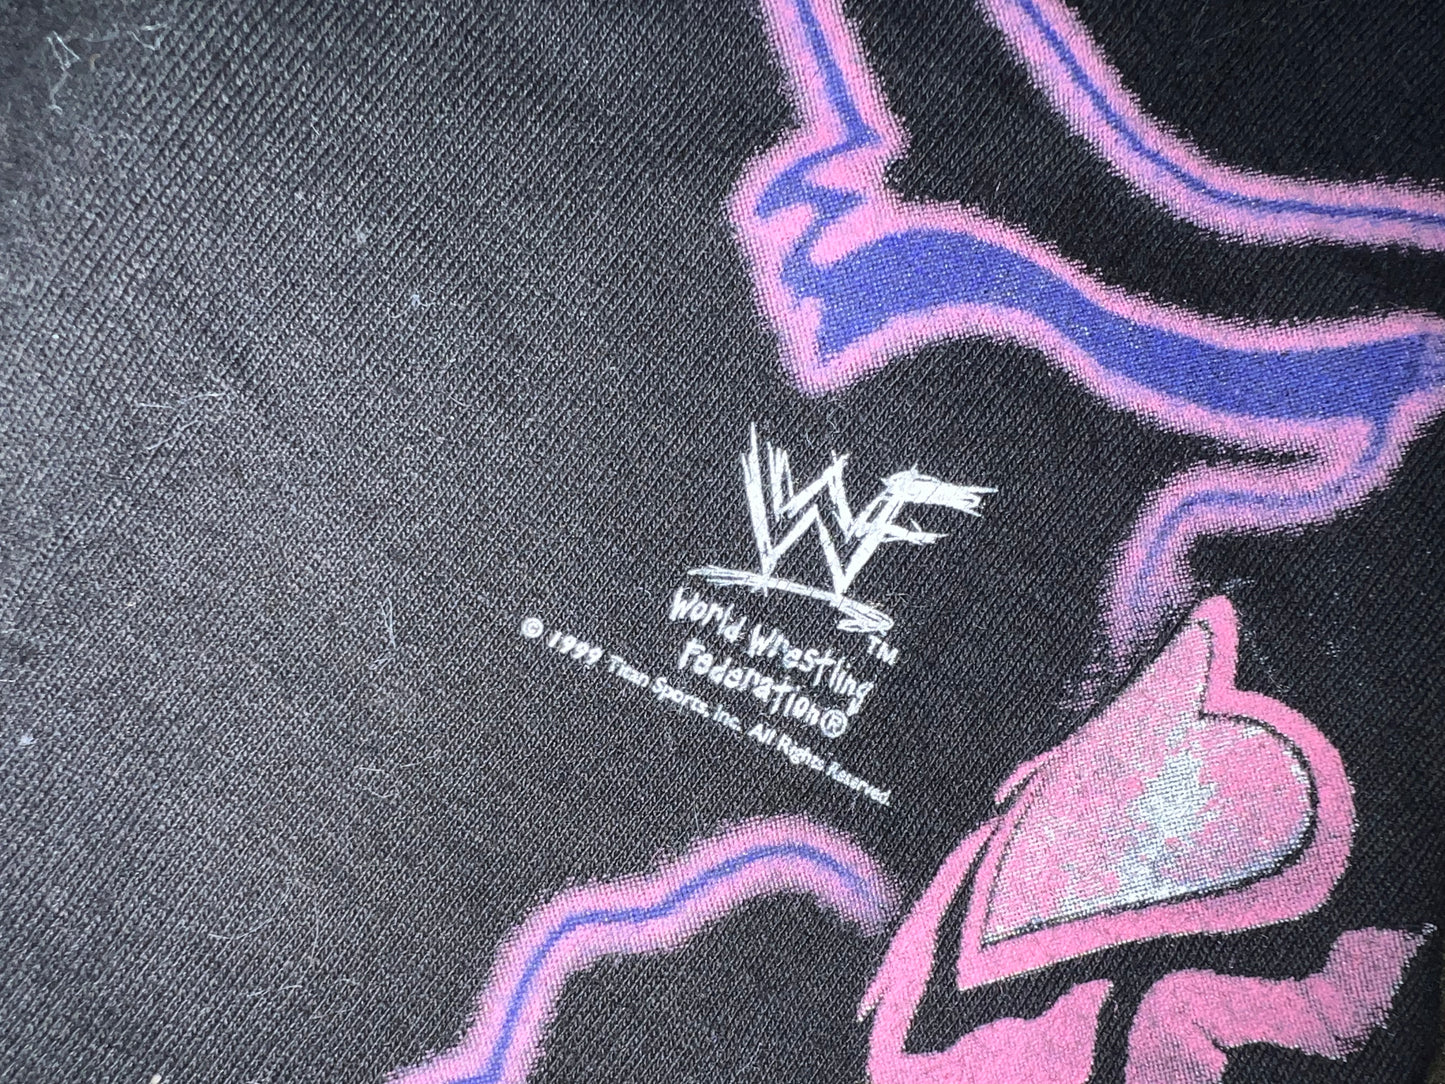 1999 WWF “The King of Harts” Owen Hart shirt

The